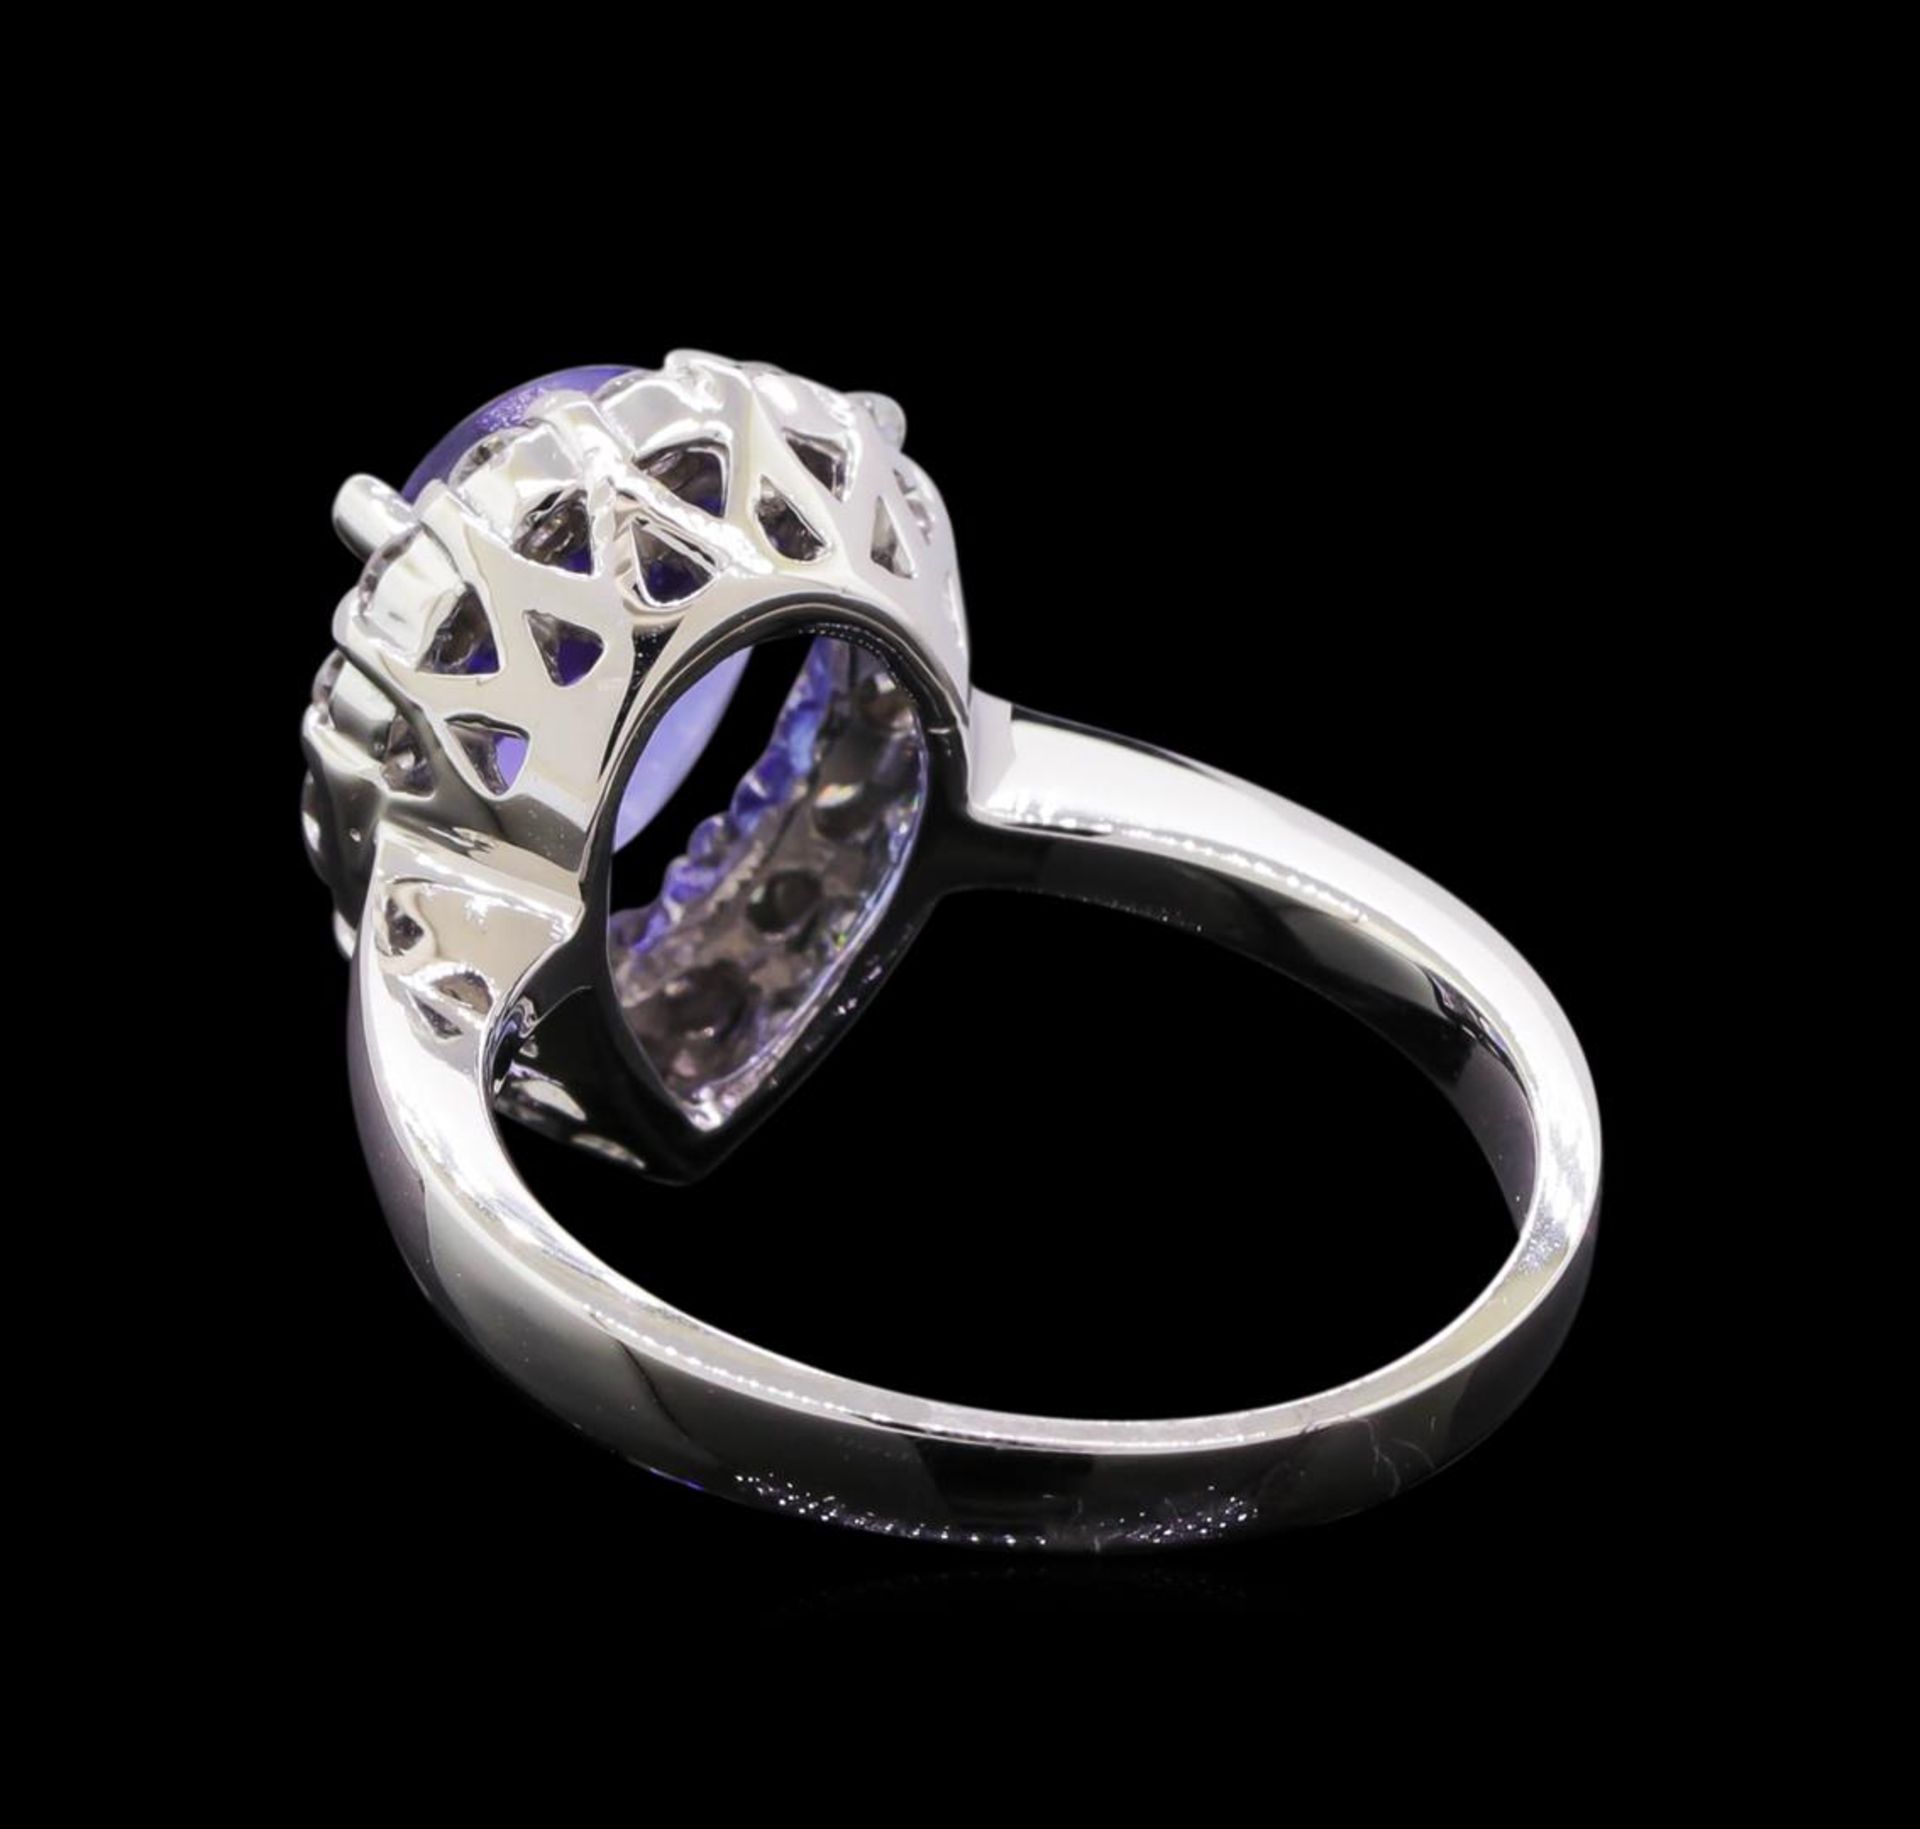 3.02 ctw Tanzanite and Diamond Ring - 14KT White Gold - Image 3 of 4